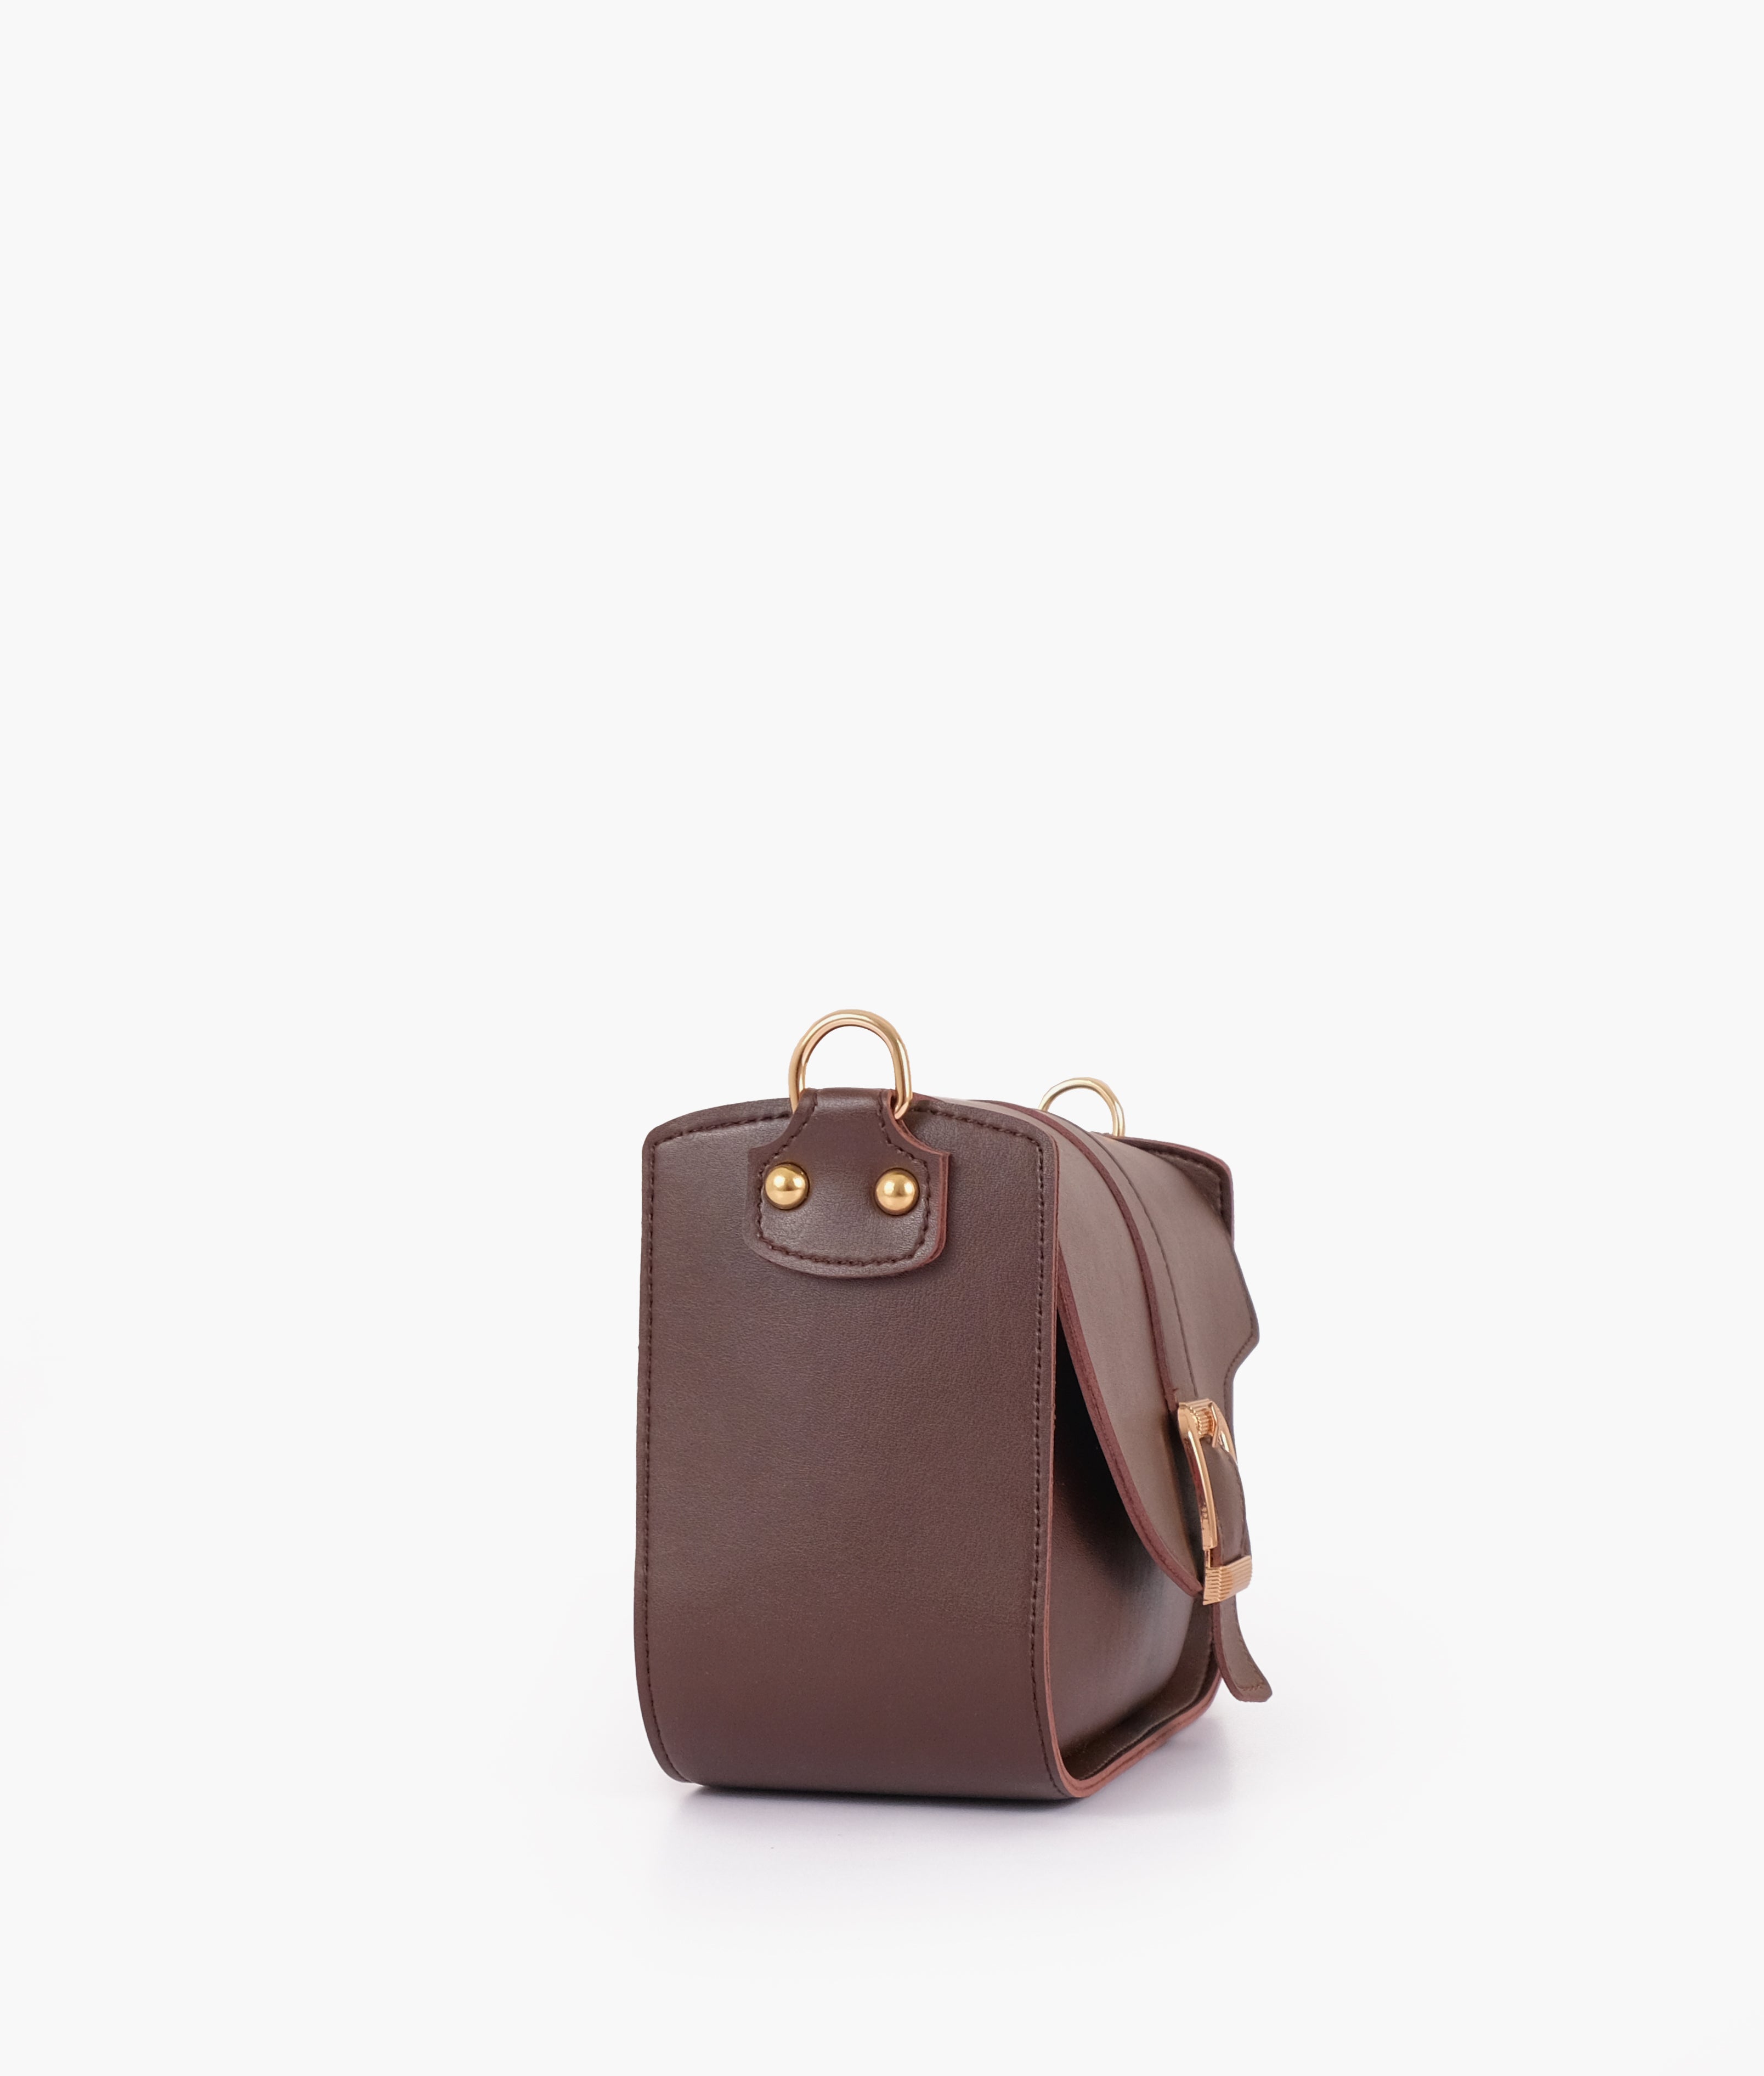 Dark brown saddle buckle bag